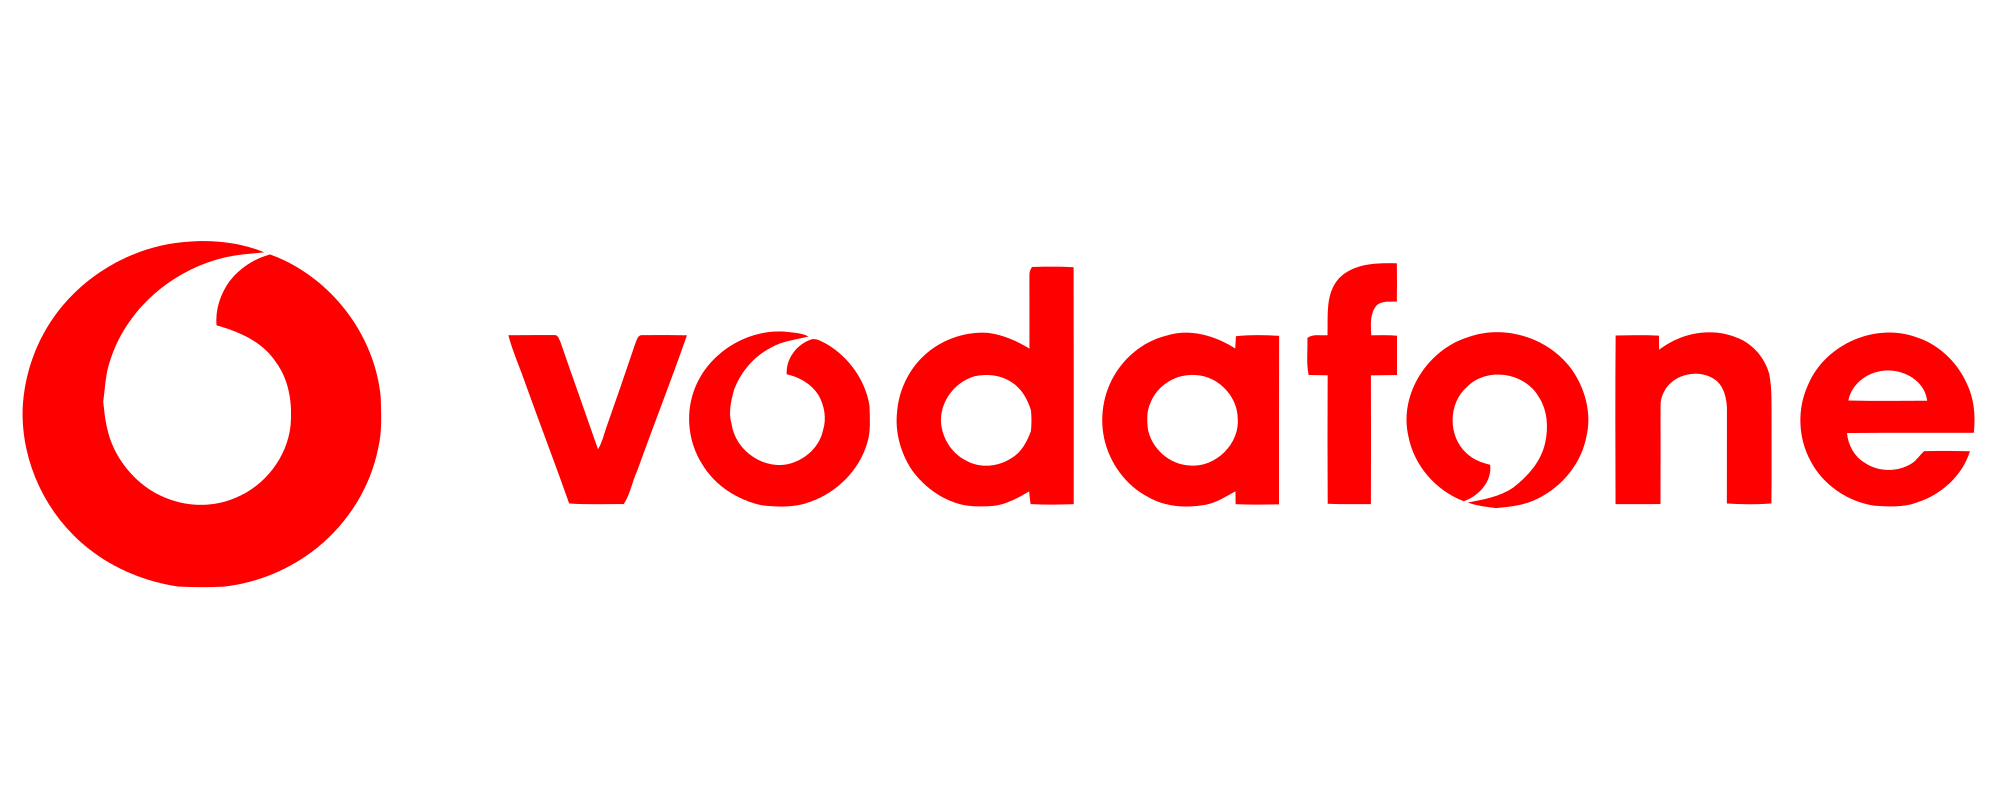 New Logo for Vodafone by Bran